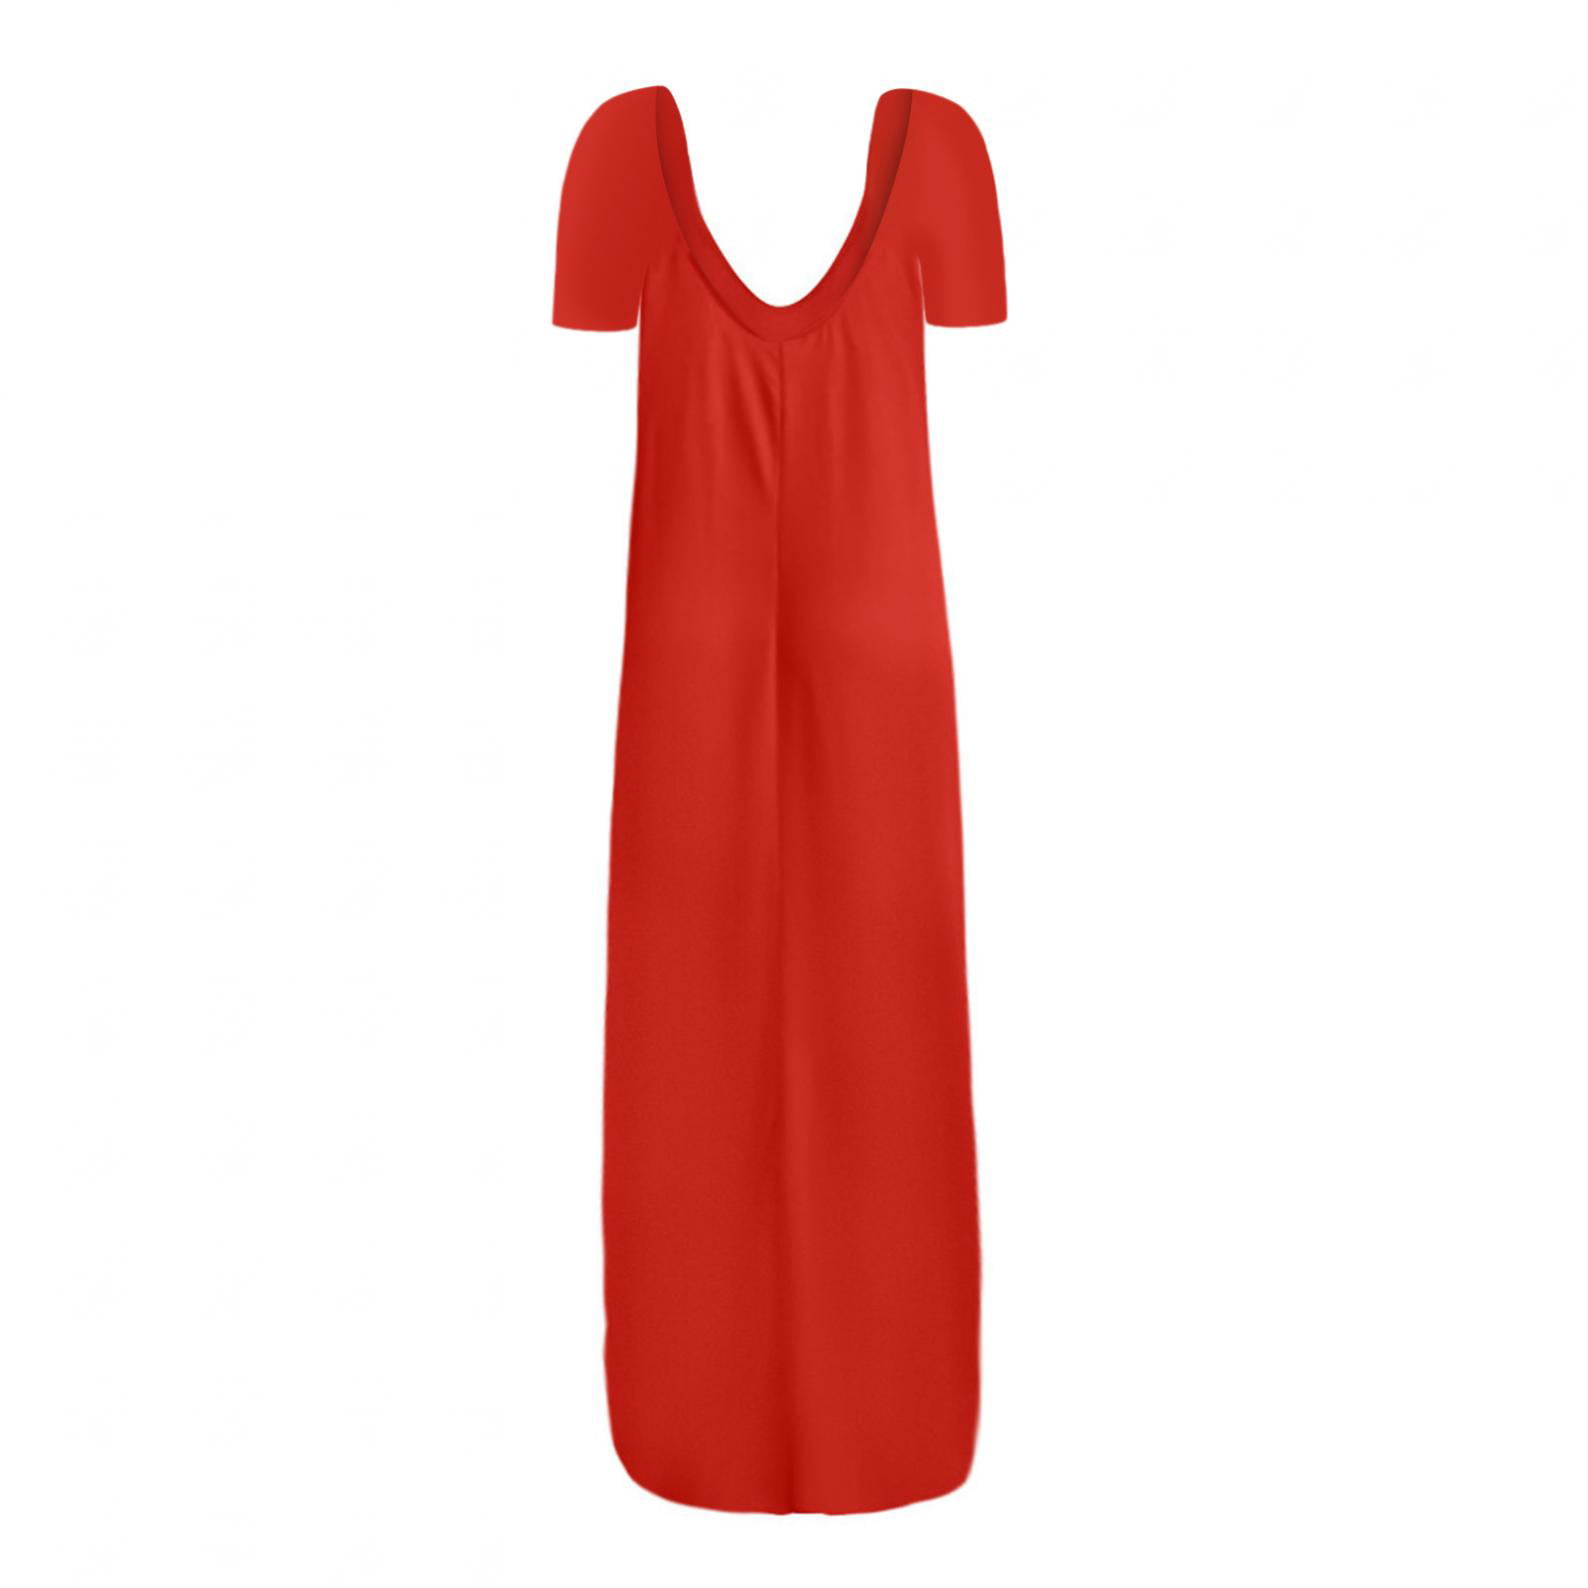 Lenago Women's Plus Size Deep V-Neck Standard-Fit Short Sleeve Solid Maxi Party Dress - image 2 of 6